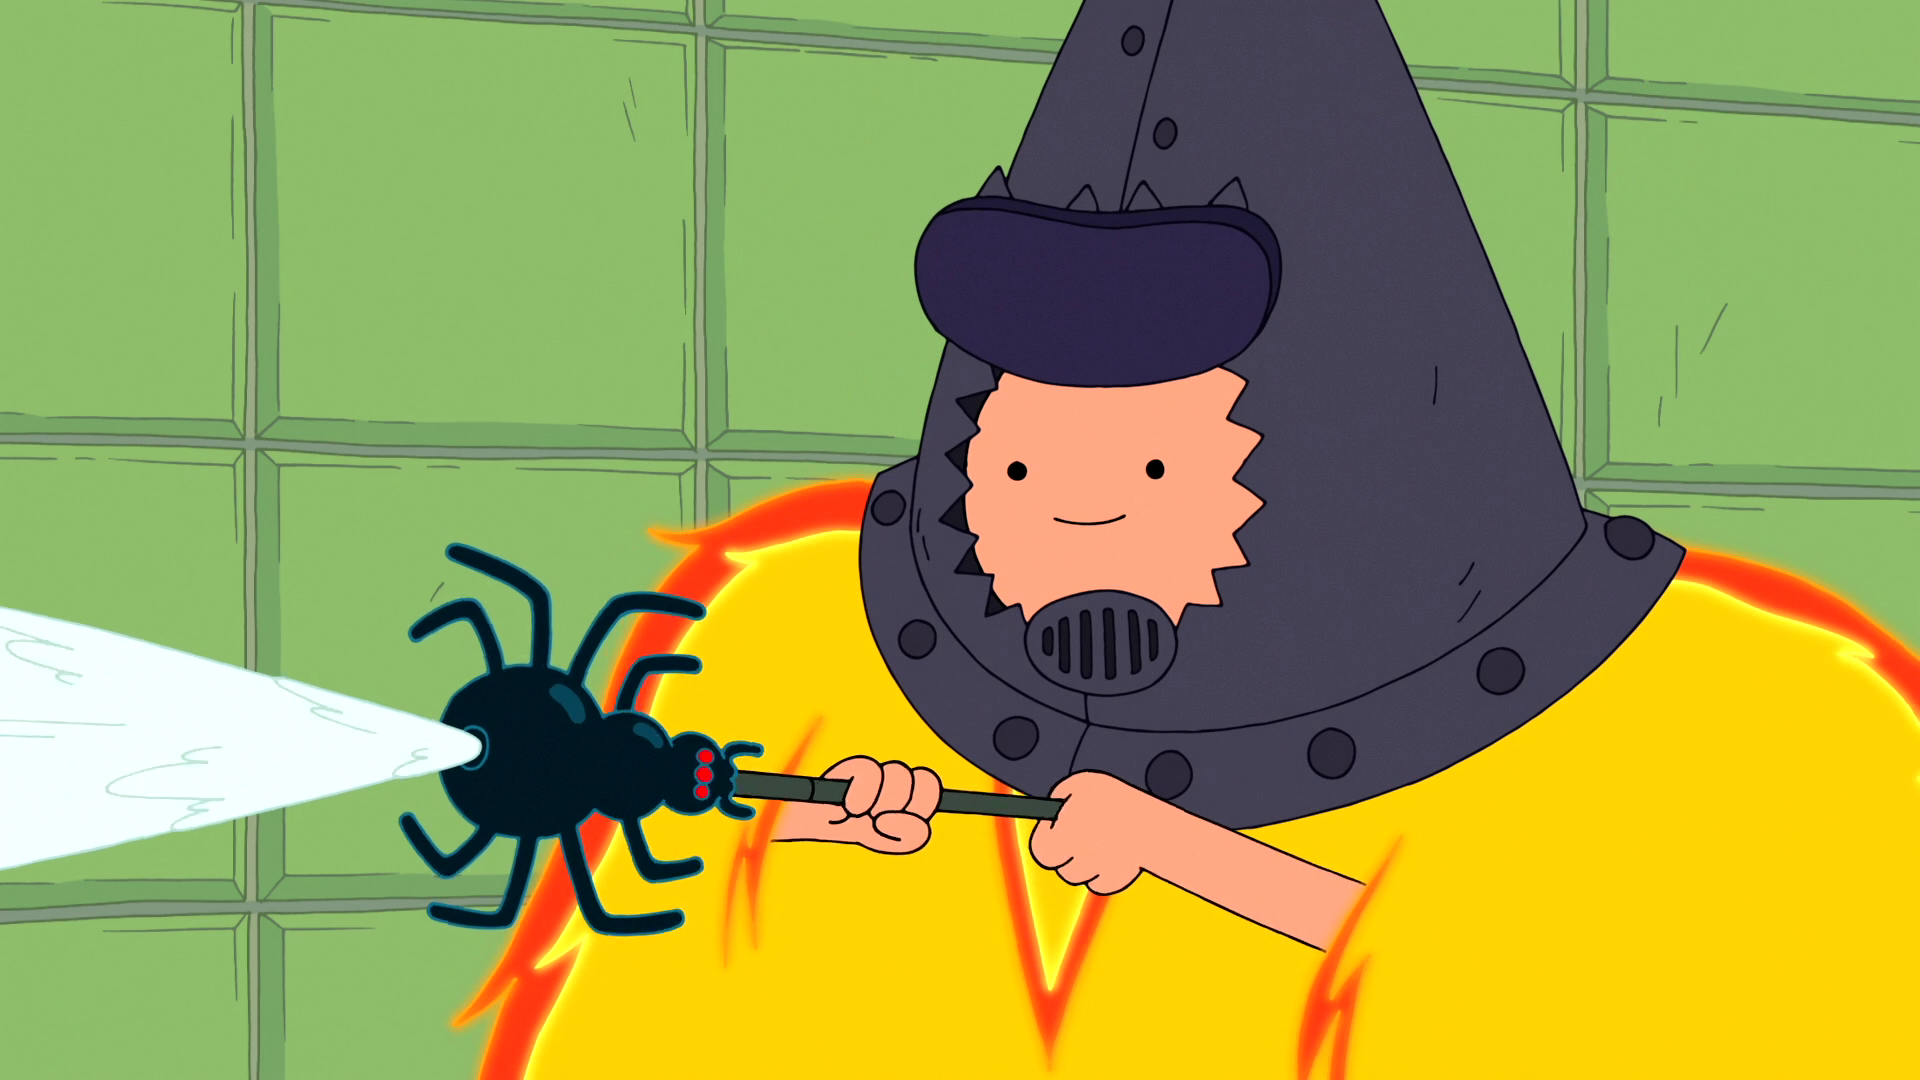 Spider Wand Adventure Time Wiki Fandom Powered By Wikia. black kitchen with...